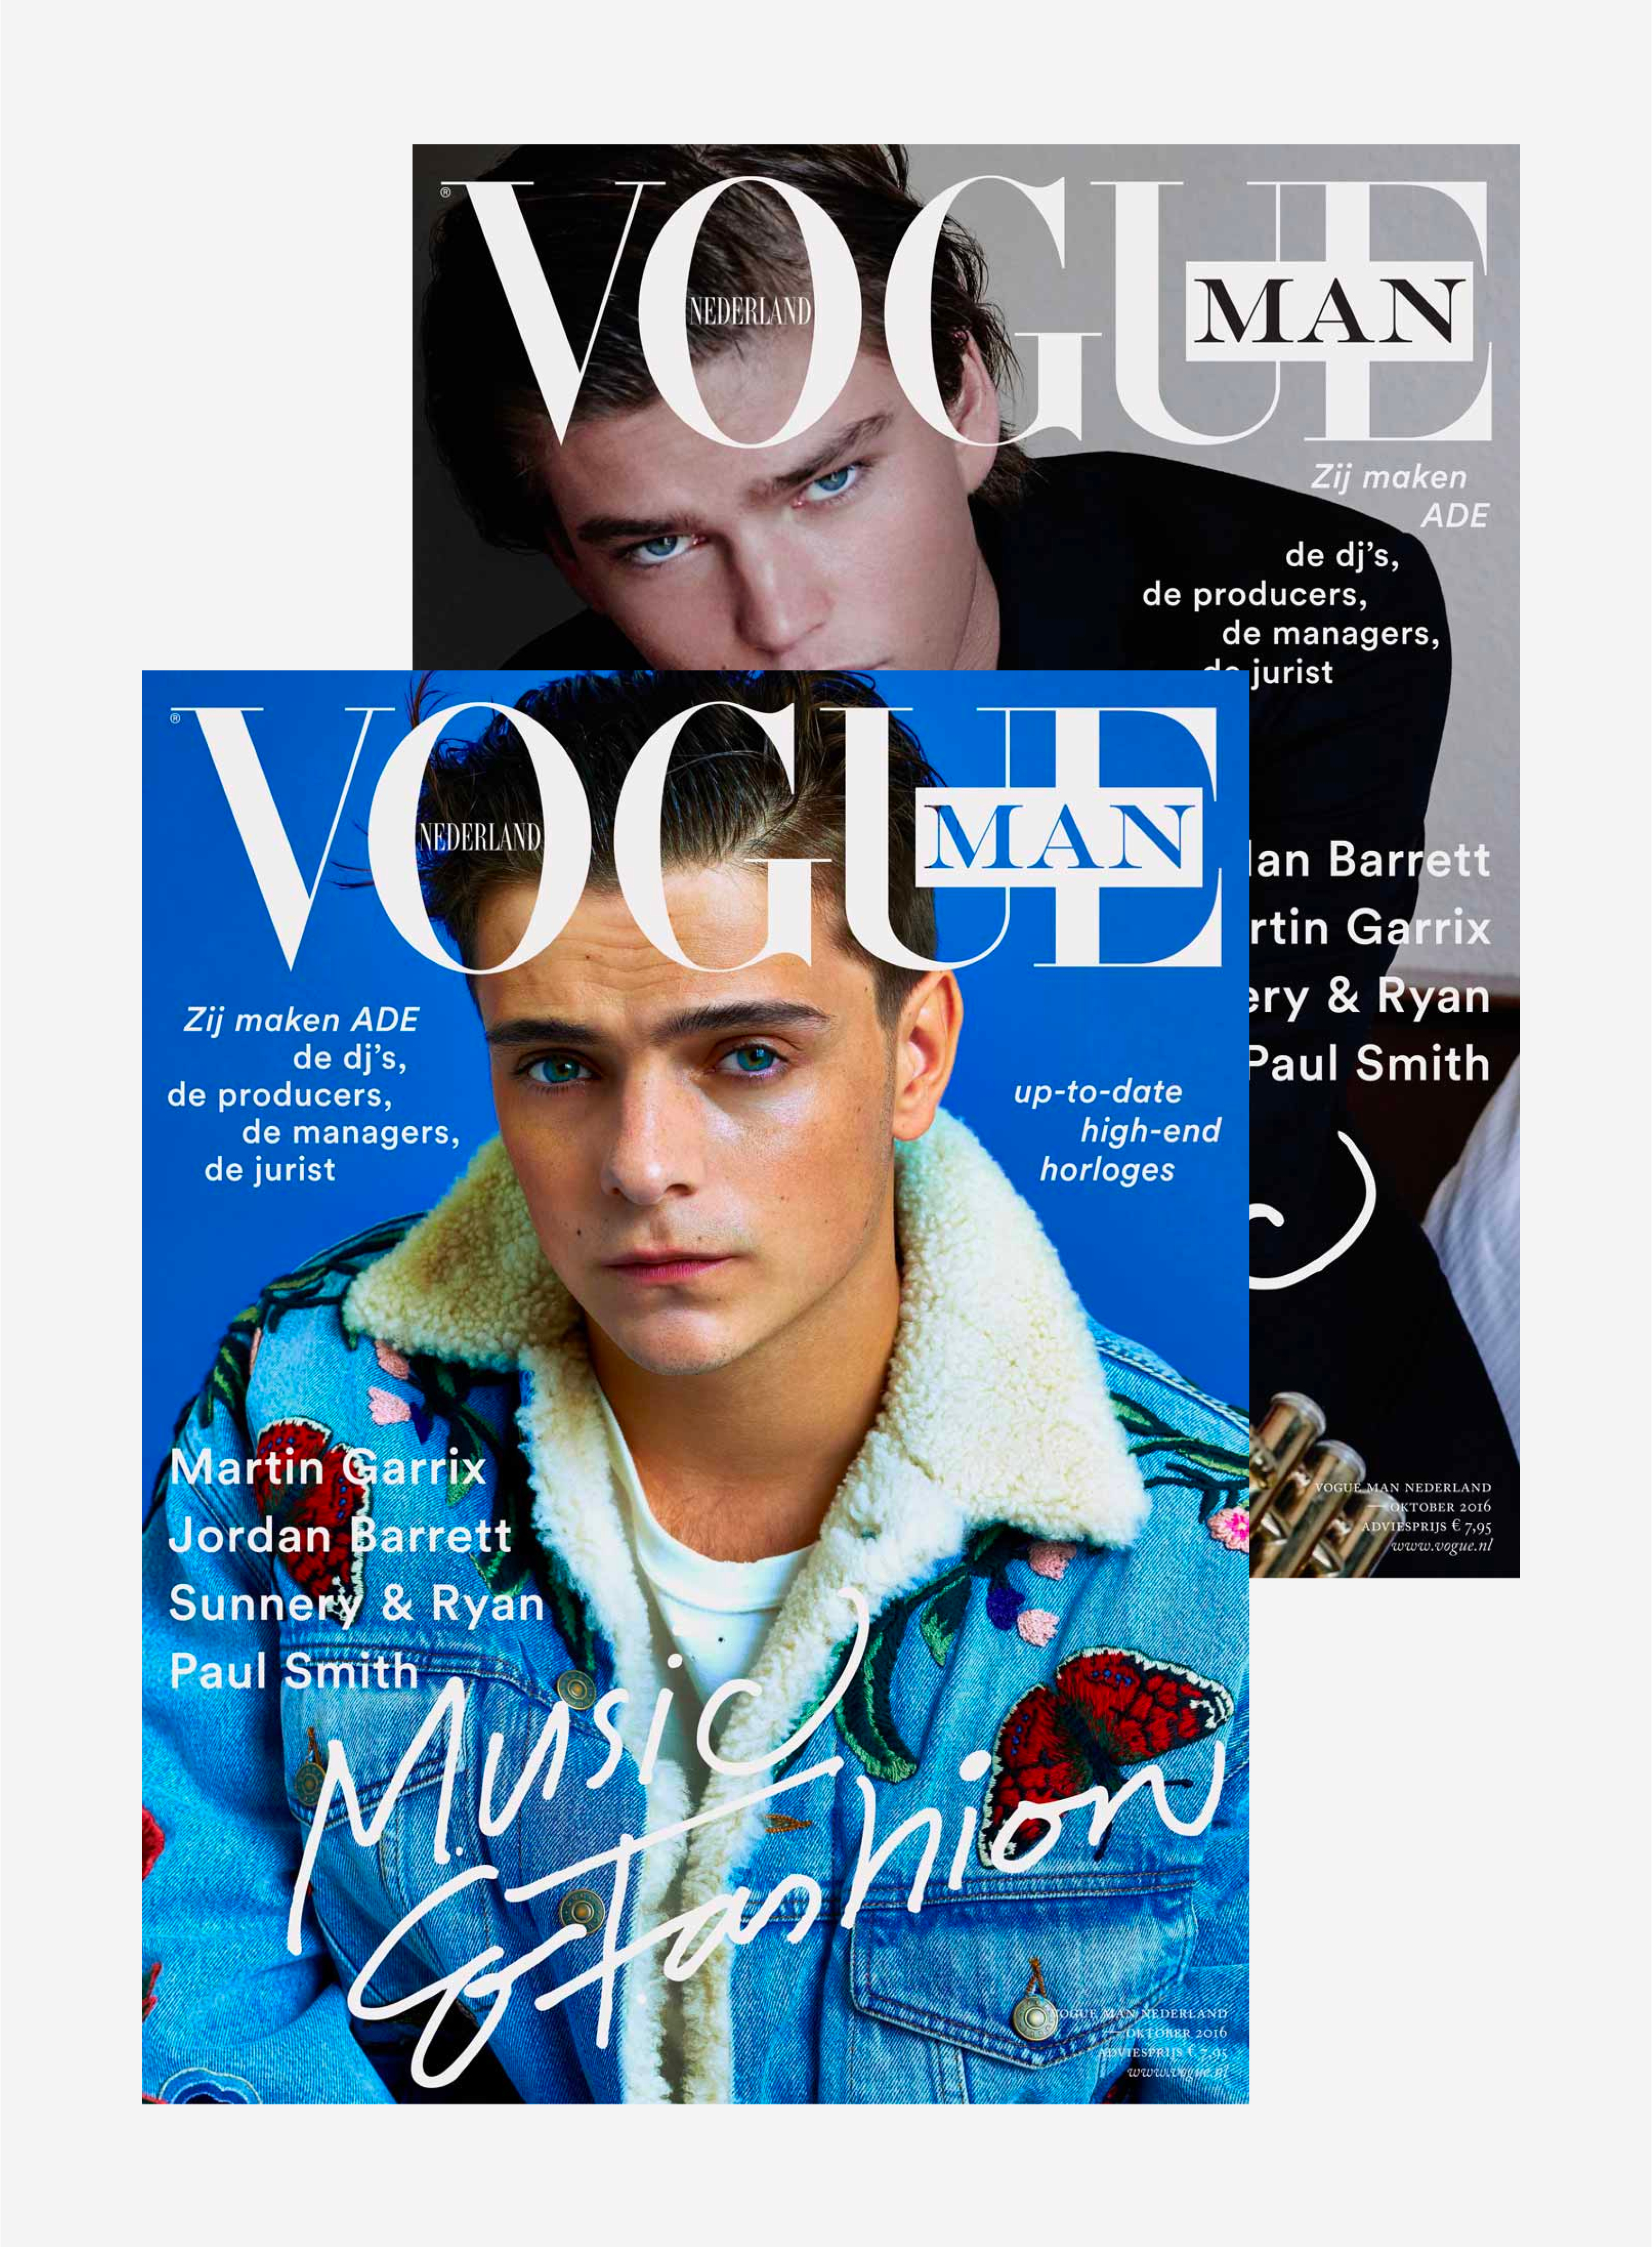 vogue man, magazine, editorial design, fashion